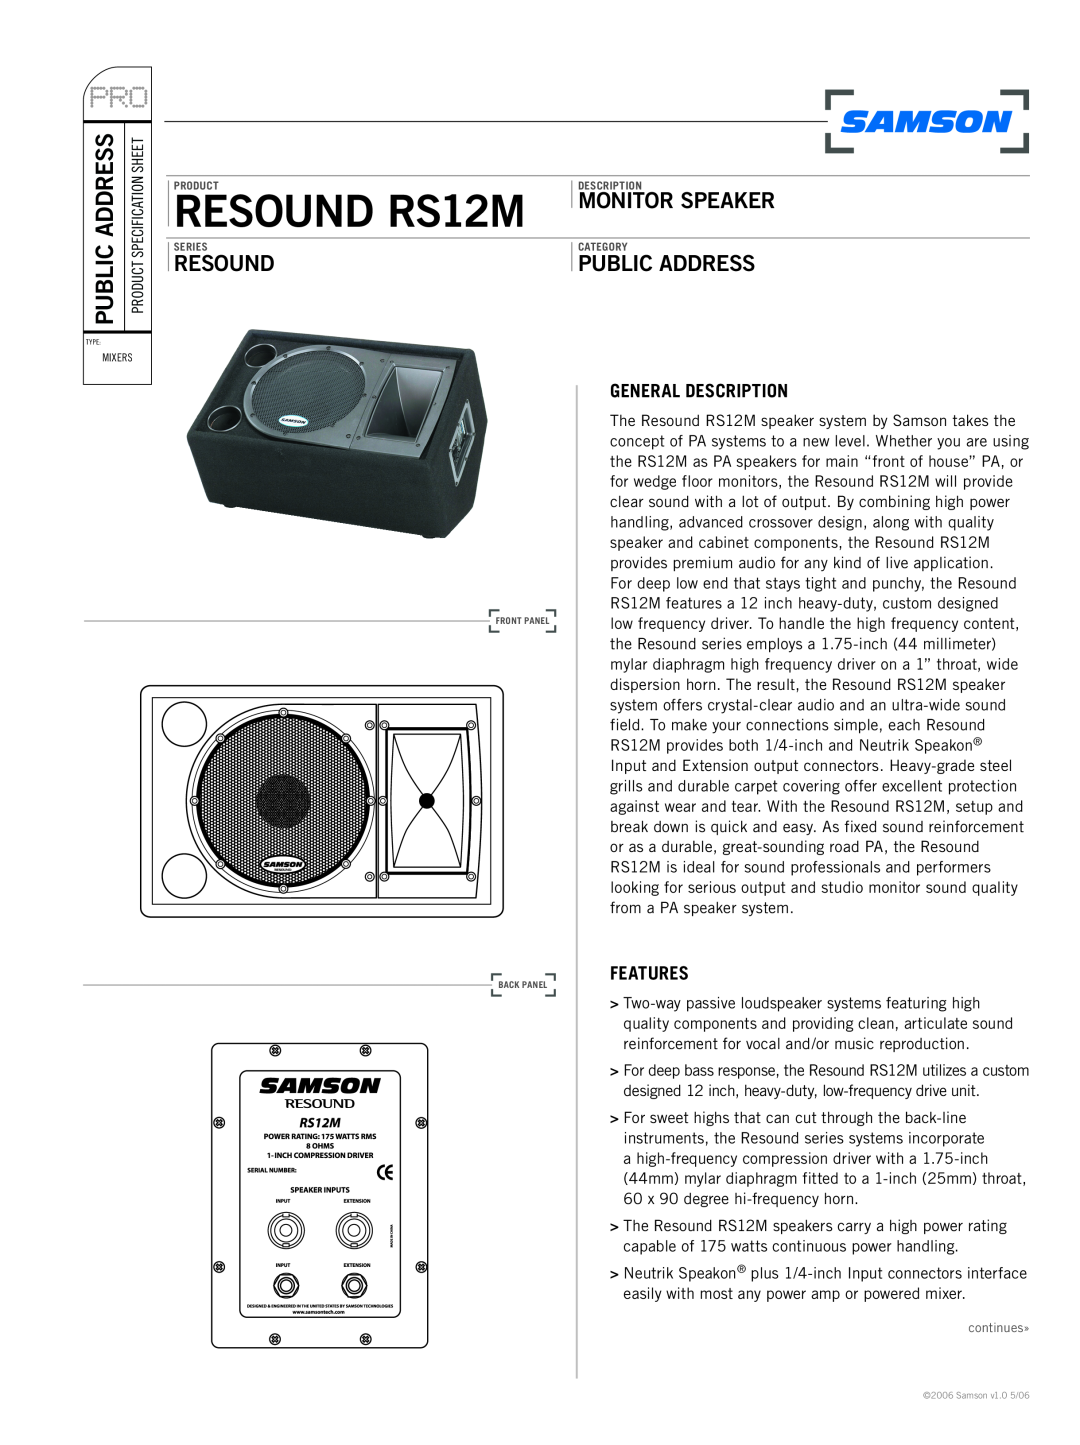 Samson RESOUND RS12M specifications General Description, Features, Public Address, Monitor Speaker, Resound 